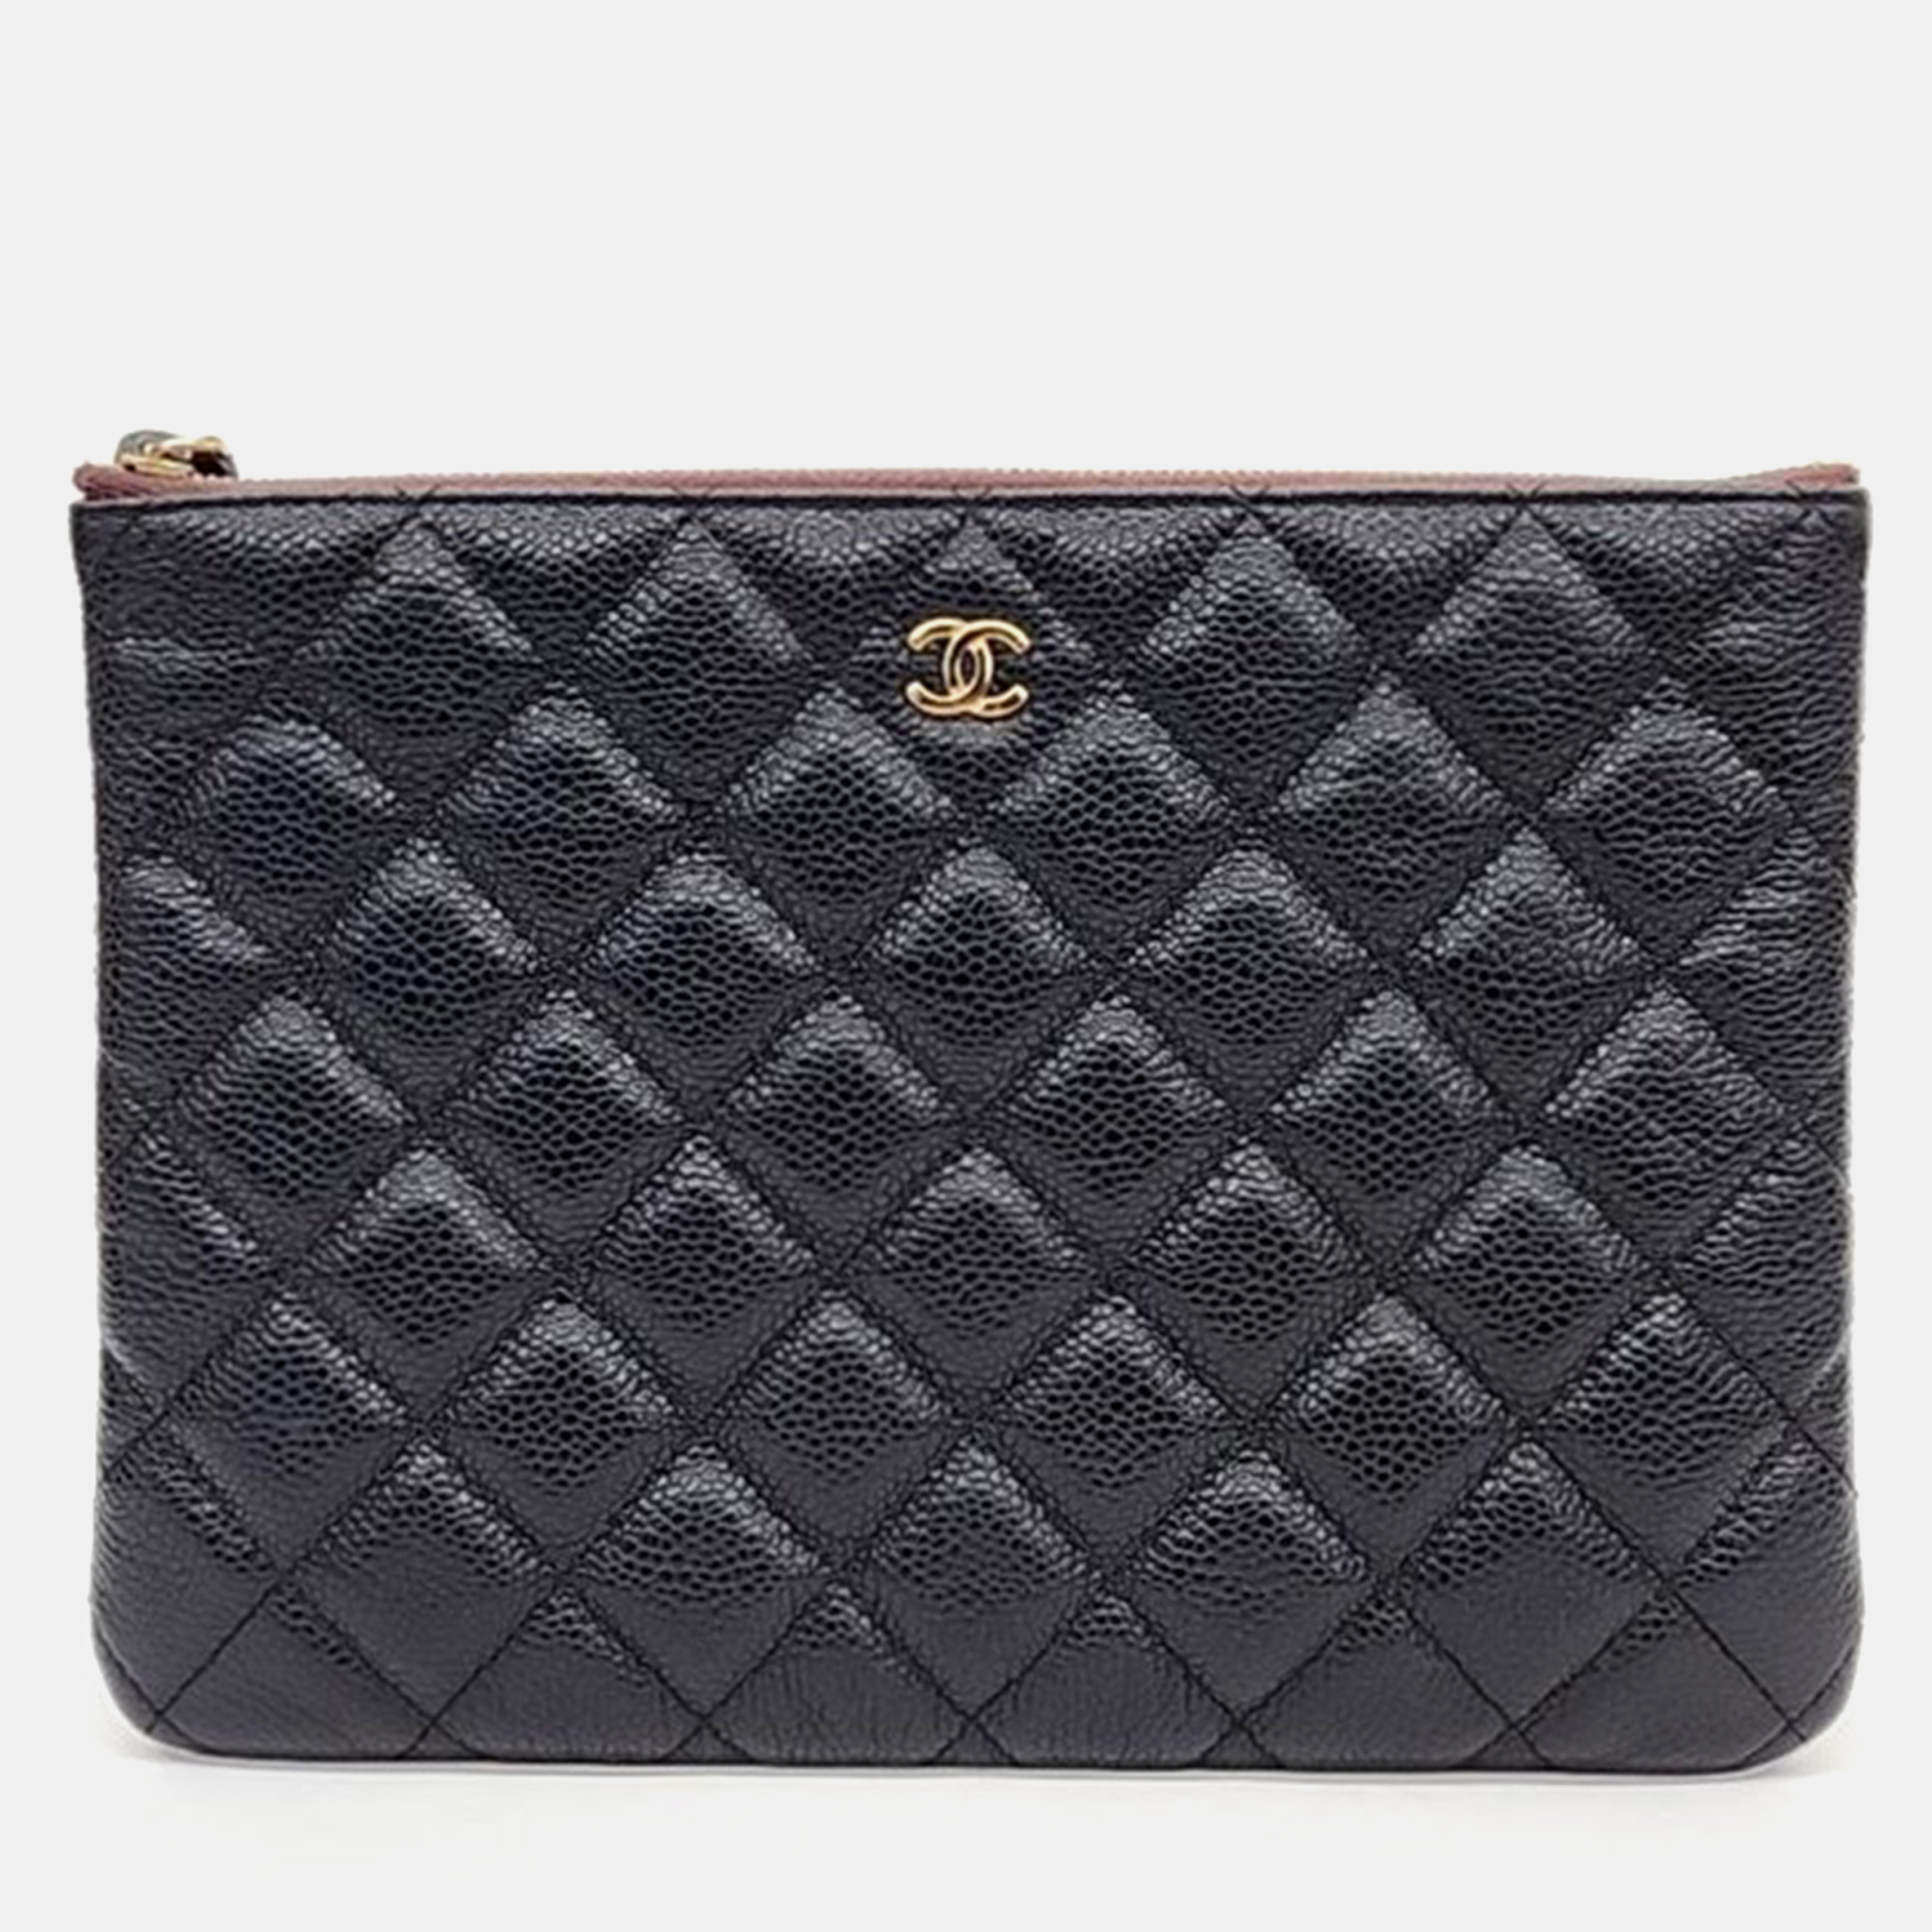 Chanel black caviar leather small clutch bag